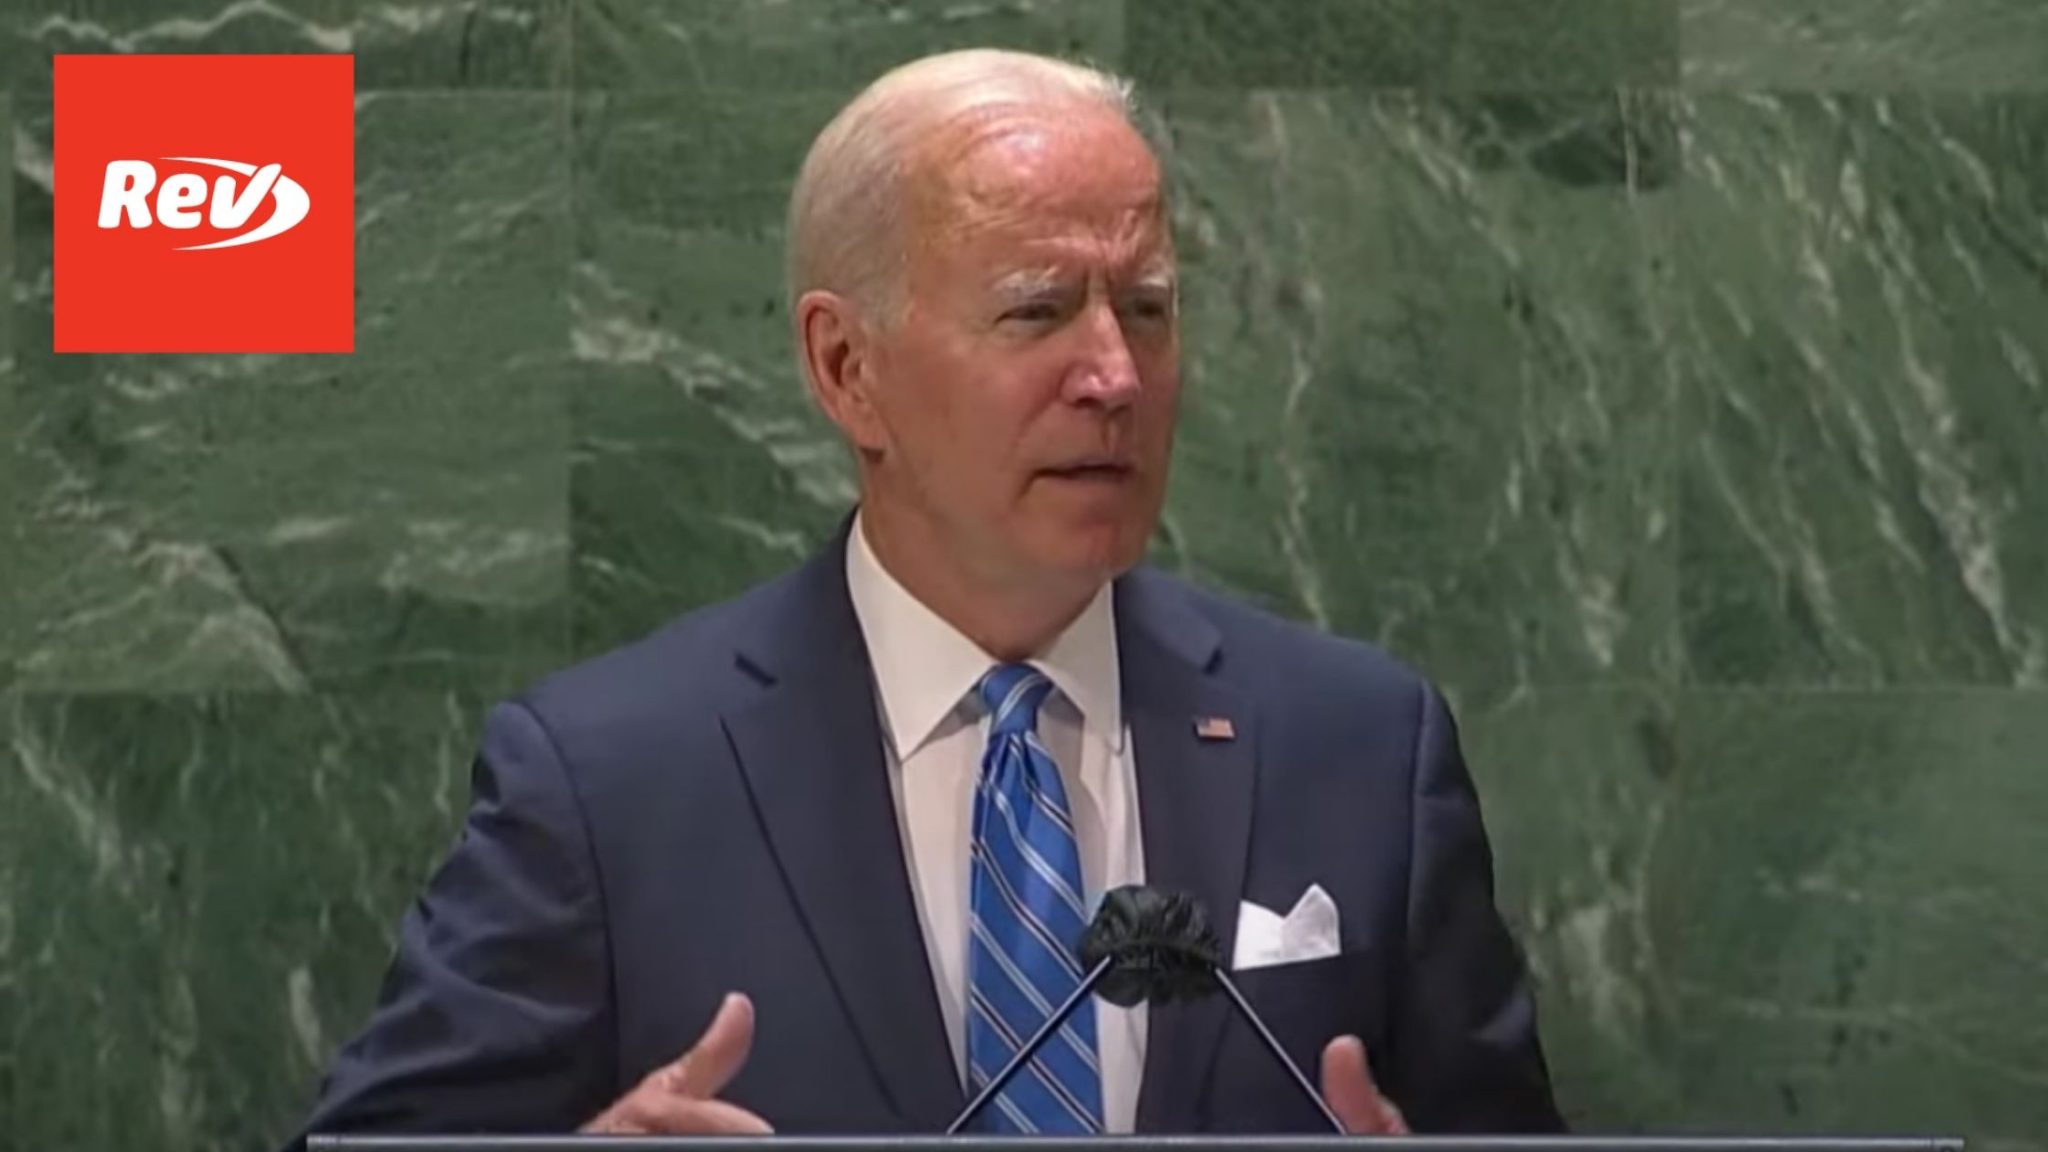 Joe Biden UN General Assembly Speech Transcript: Climate Agenda, COVID-19 Vaccines